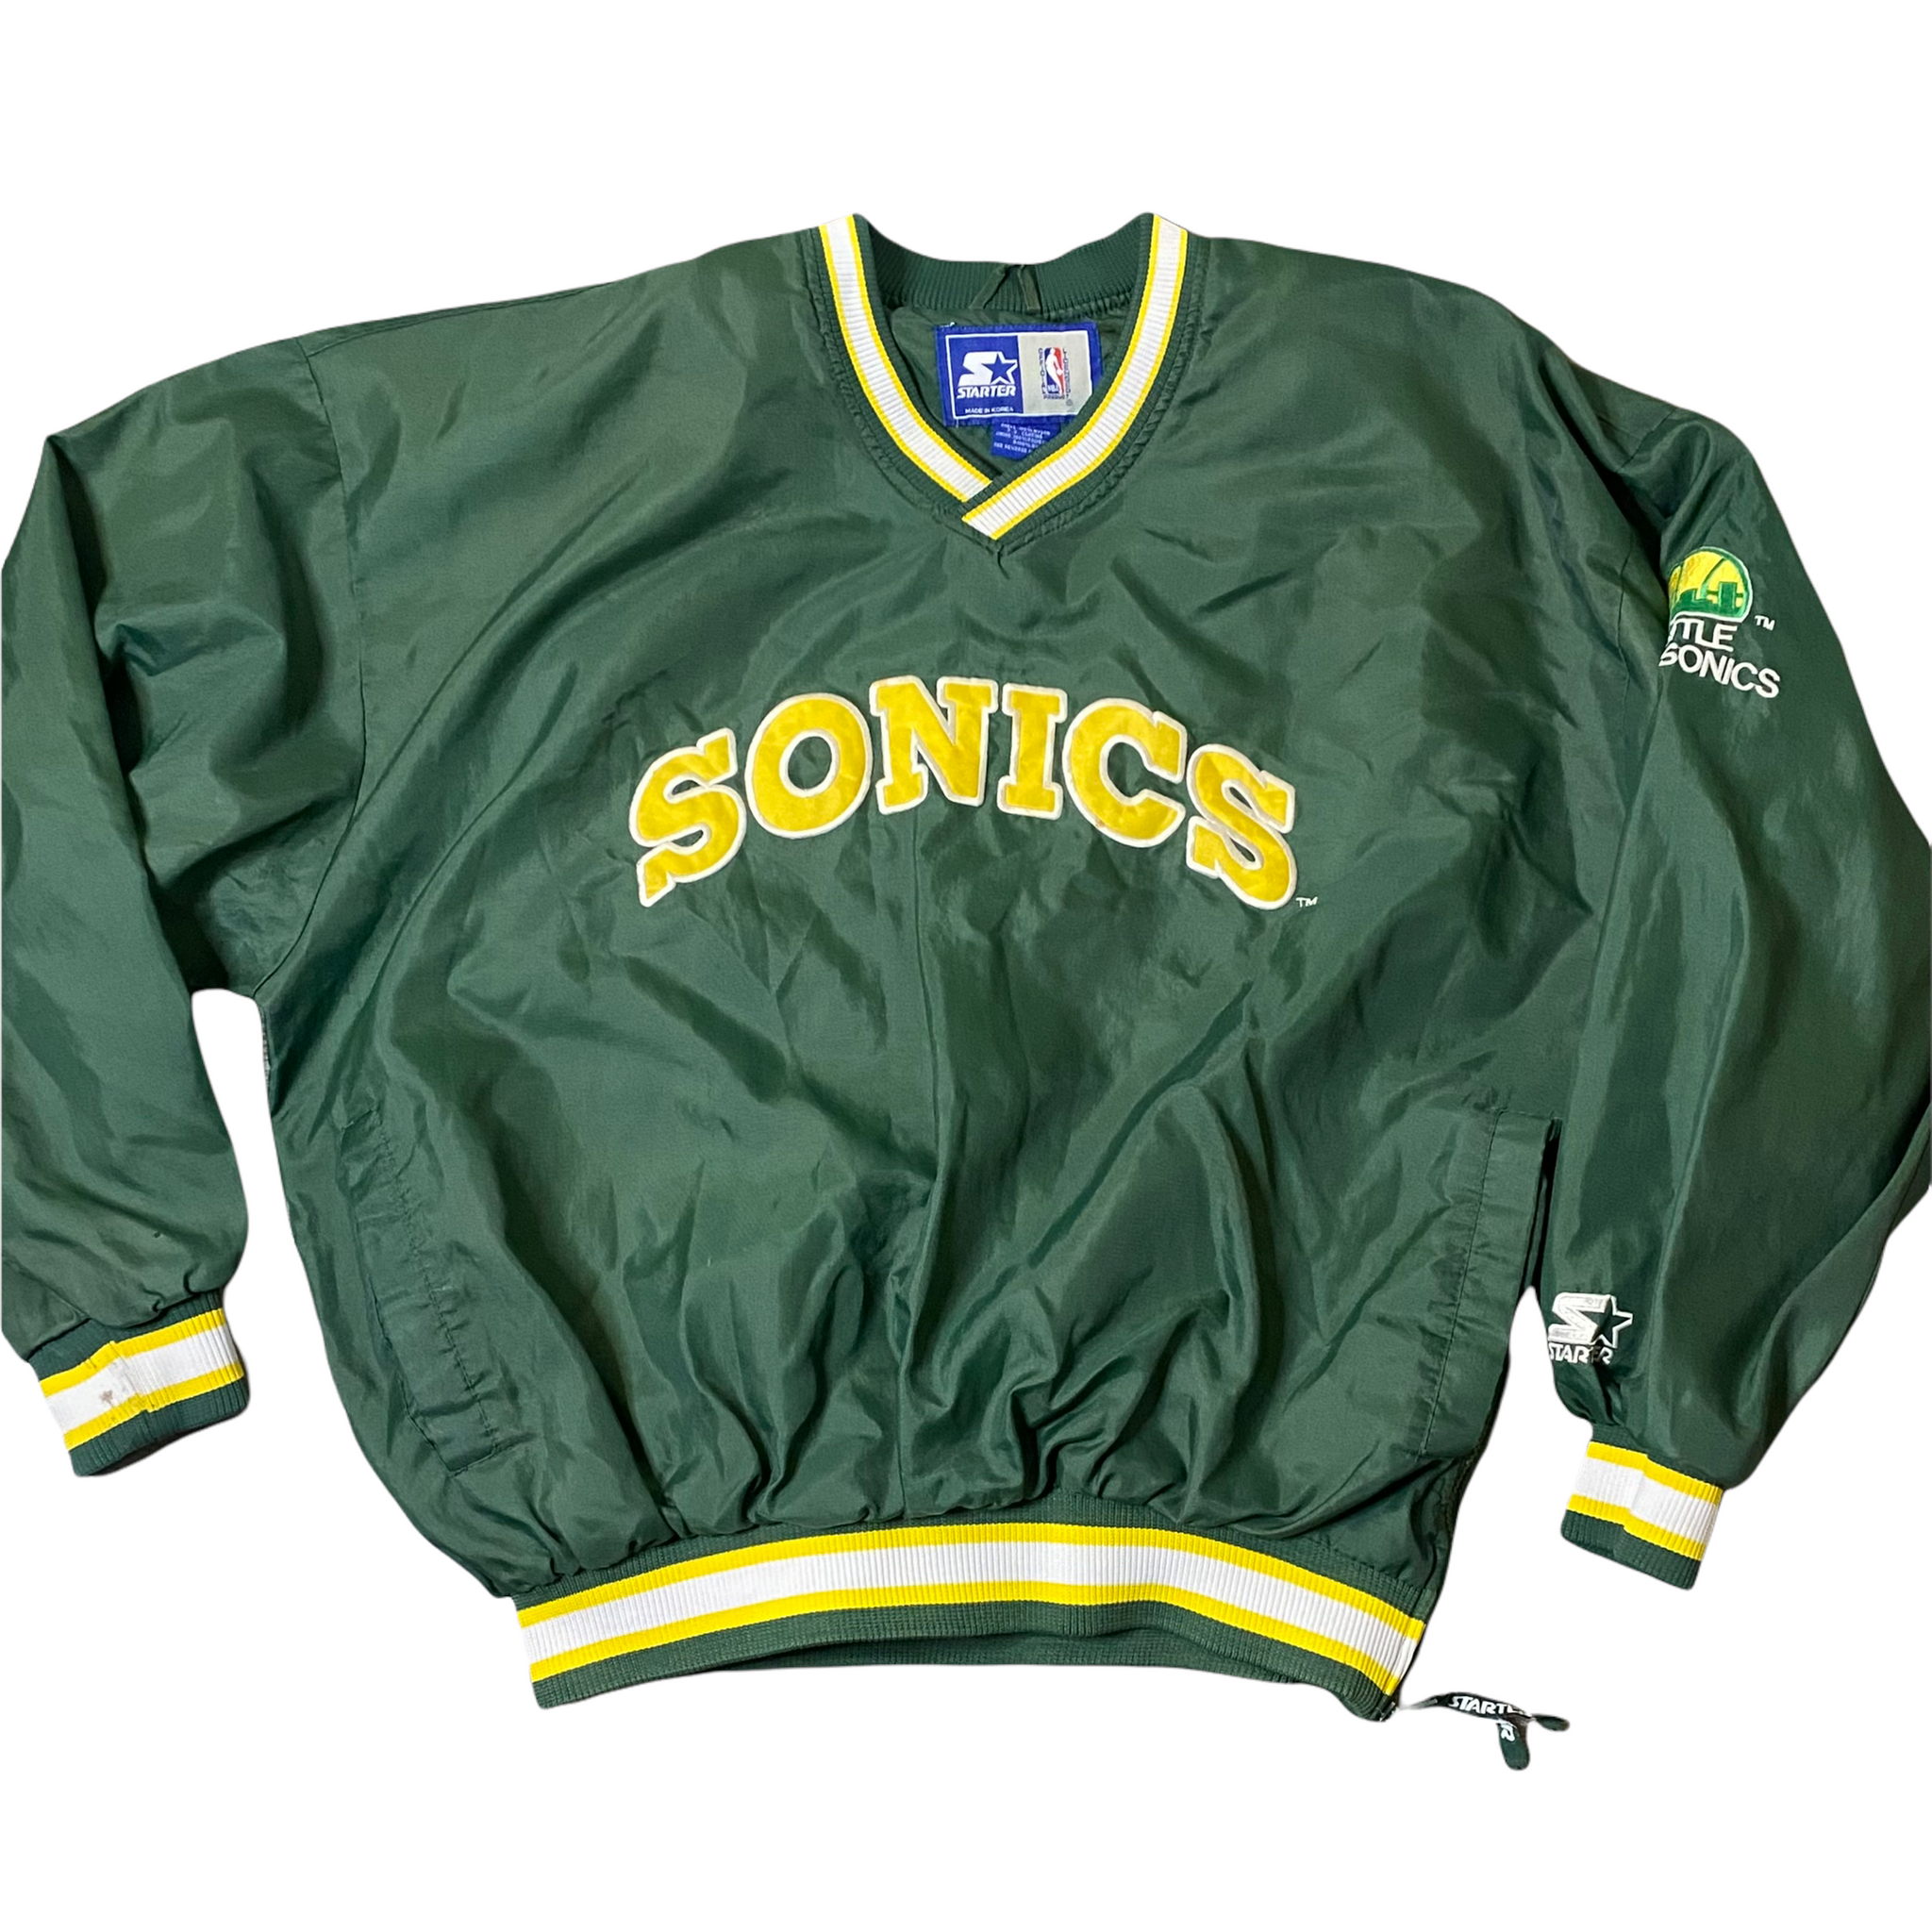 Vintage 90s Seattle Sonics NBA Crewneck Sweatshirt. Made in The USA